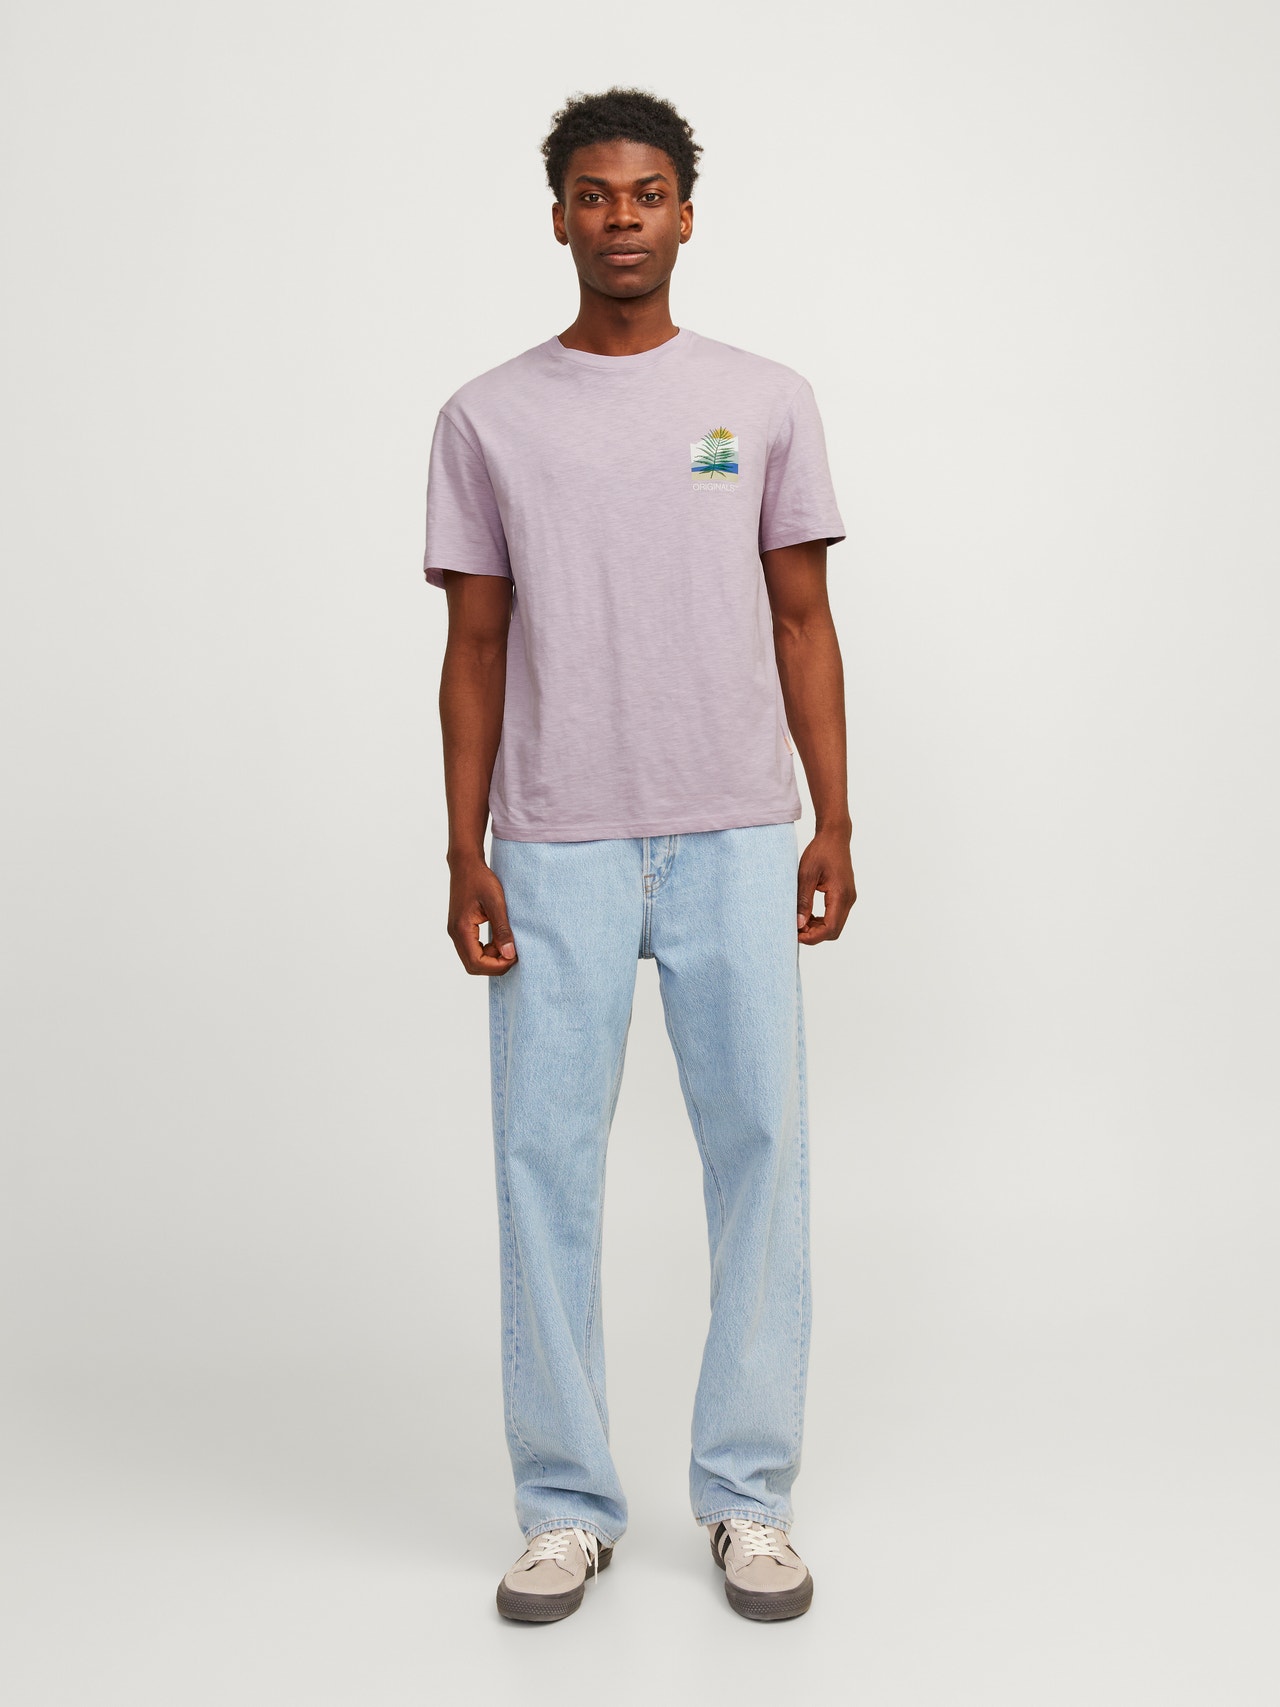 Jack & Jones T-shirt Estampar Decote Redondo -Lavender Frost - 12256215